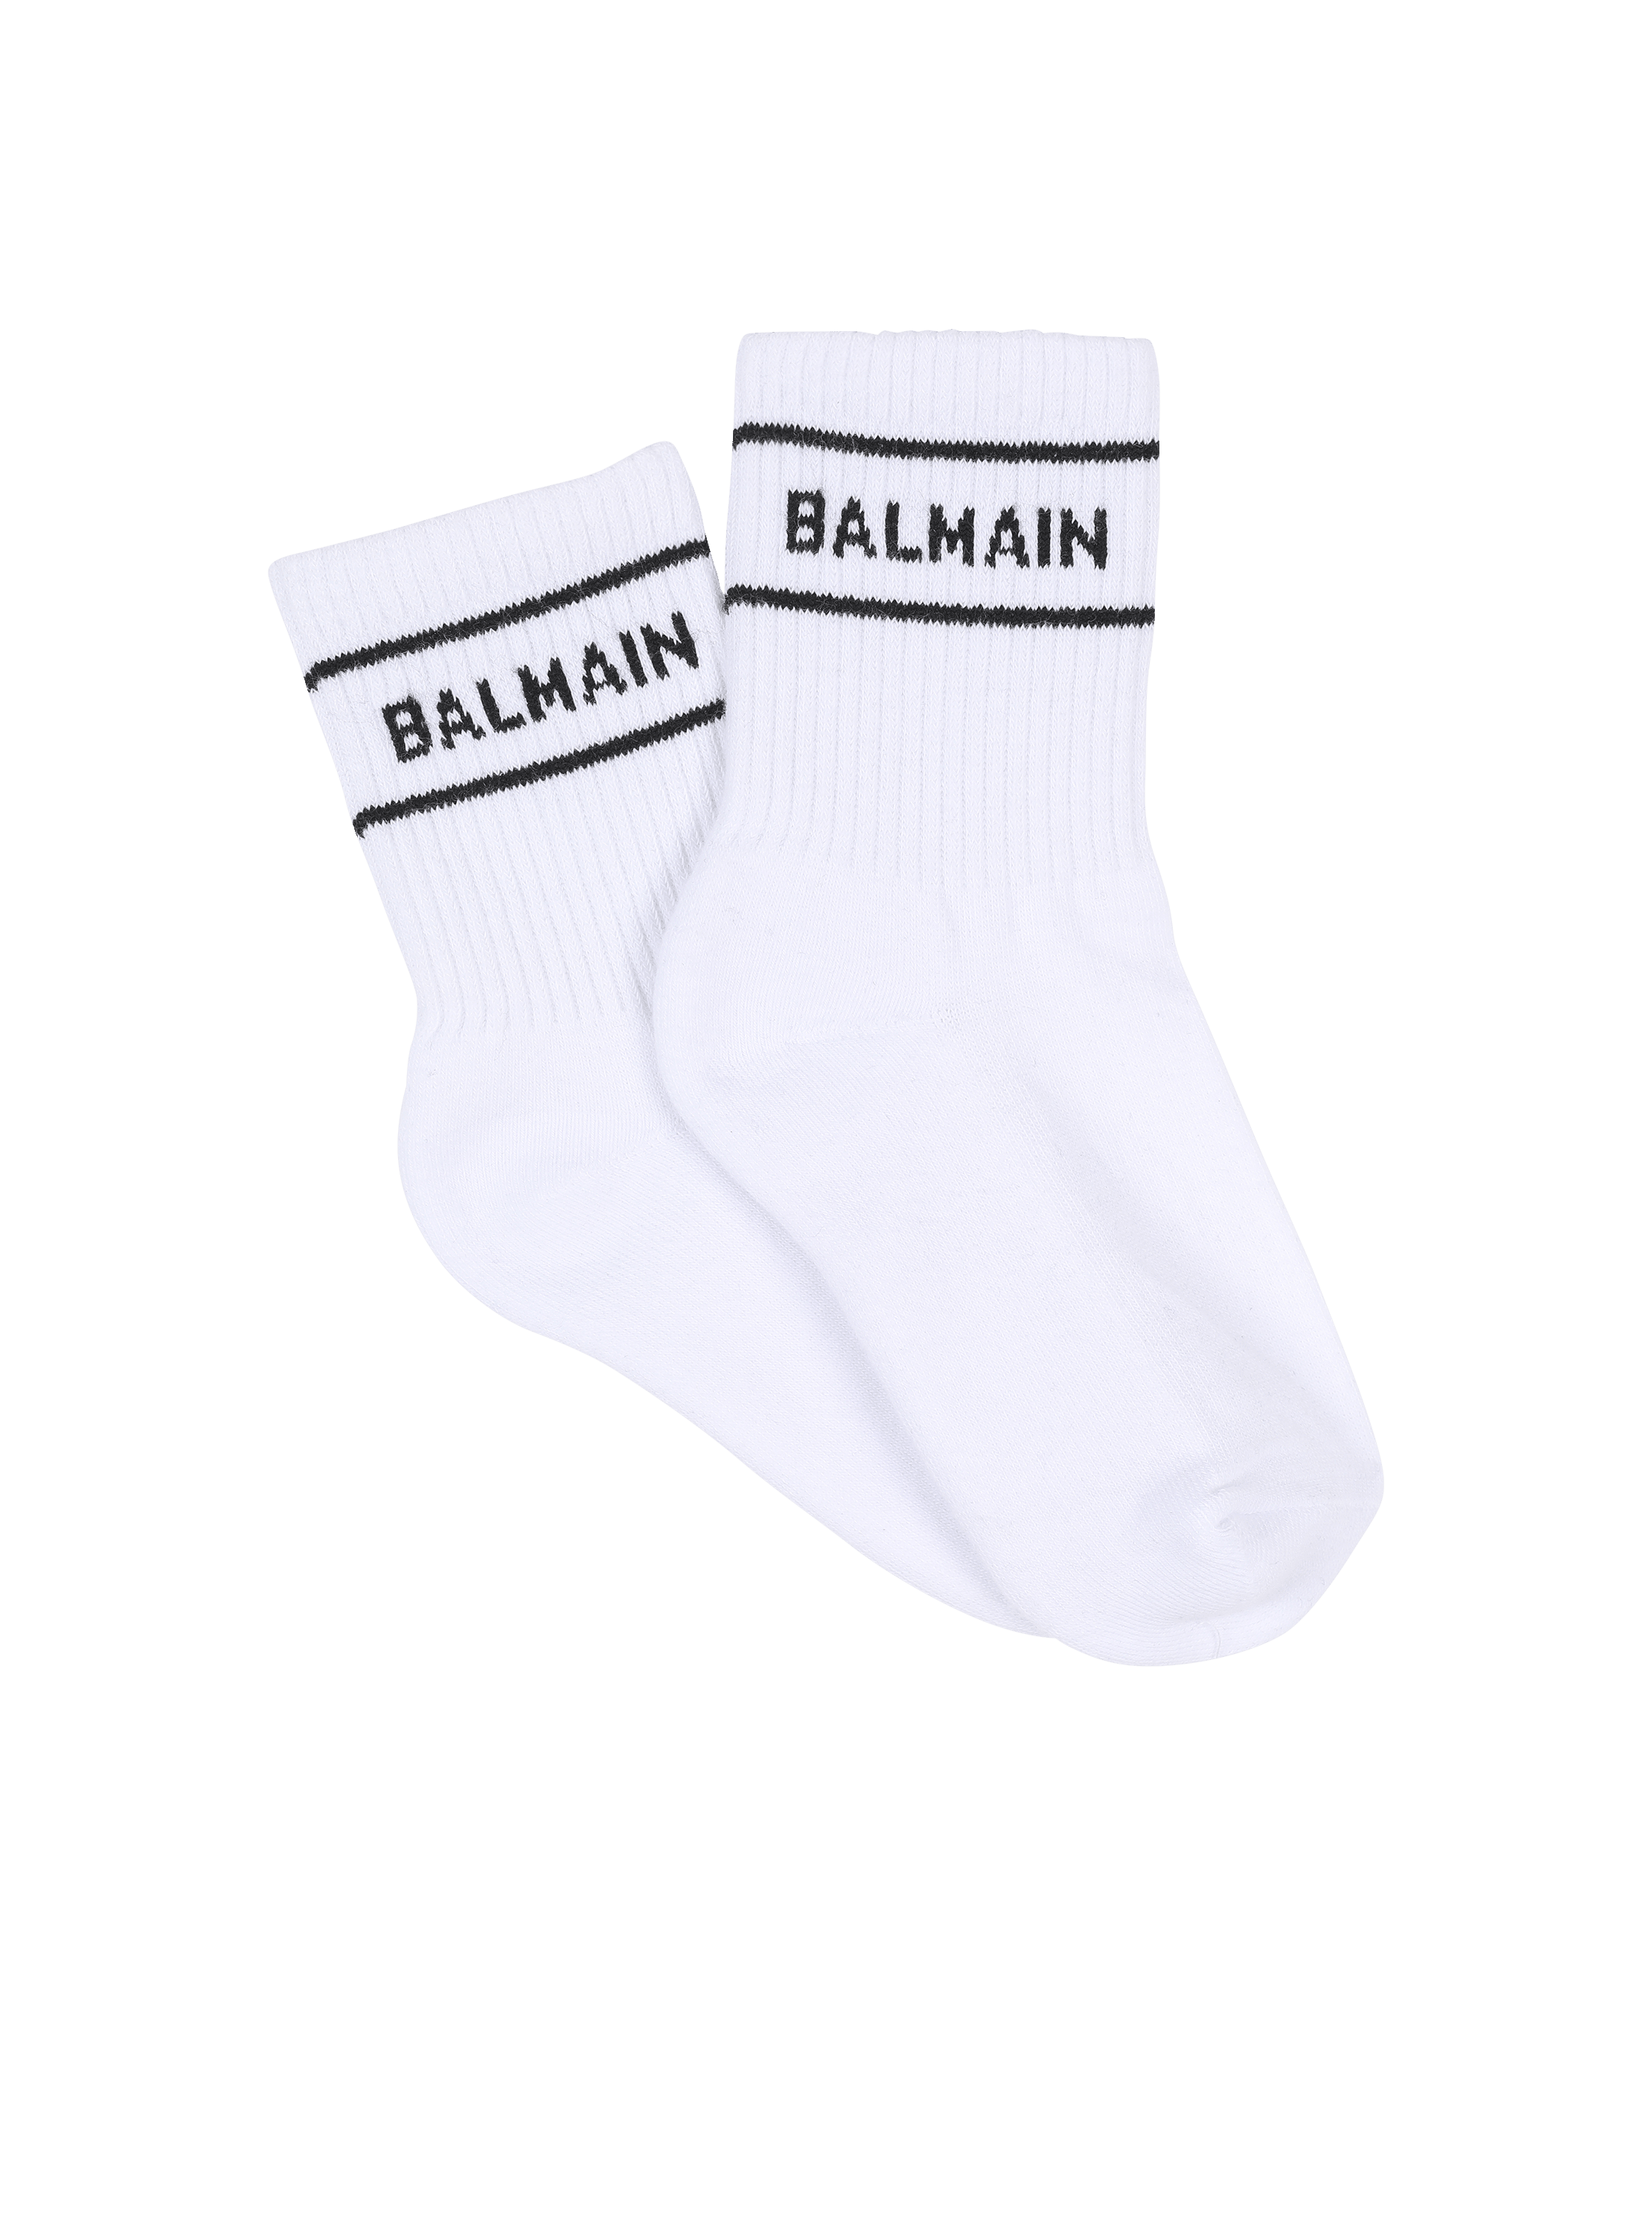 Balmain巴尔曼标志棉袜